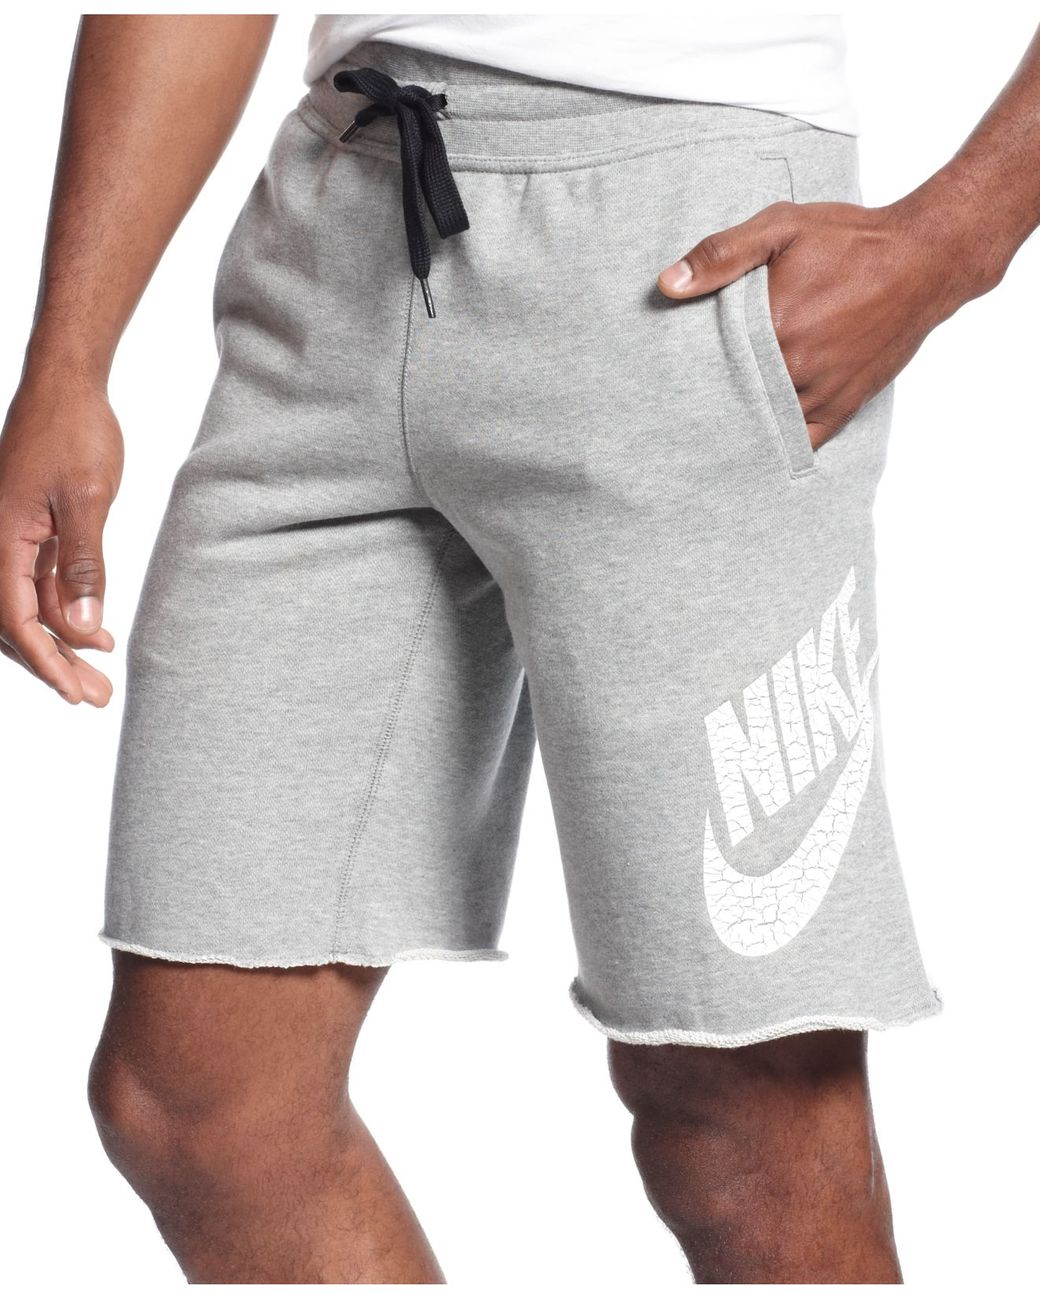 Nike Aw77 Alumni Shorts in Gray for Men